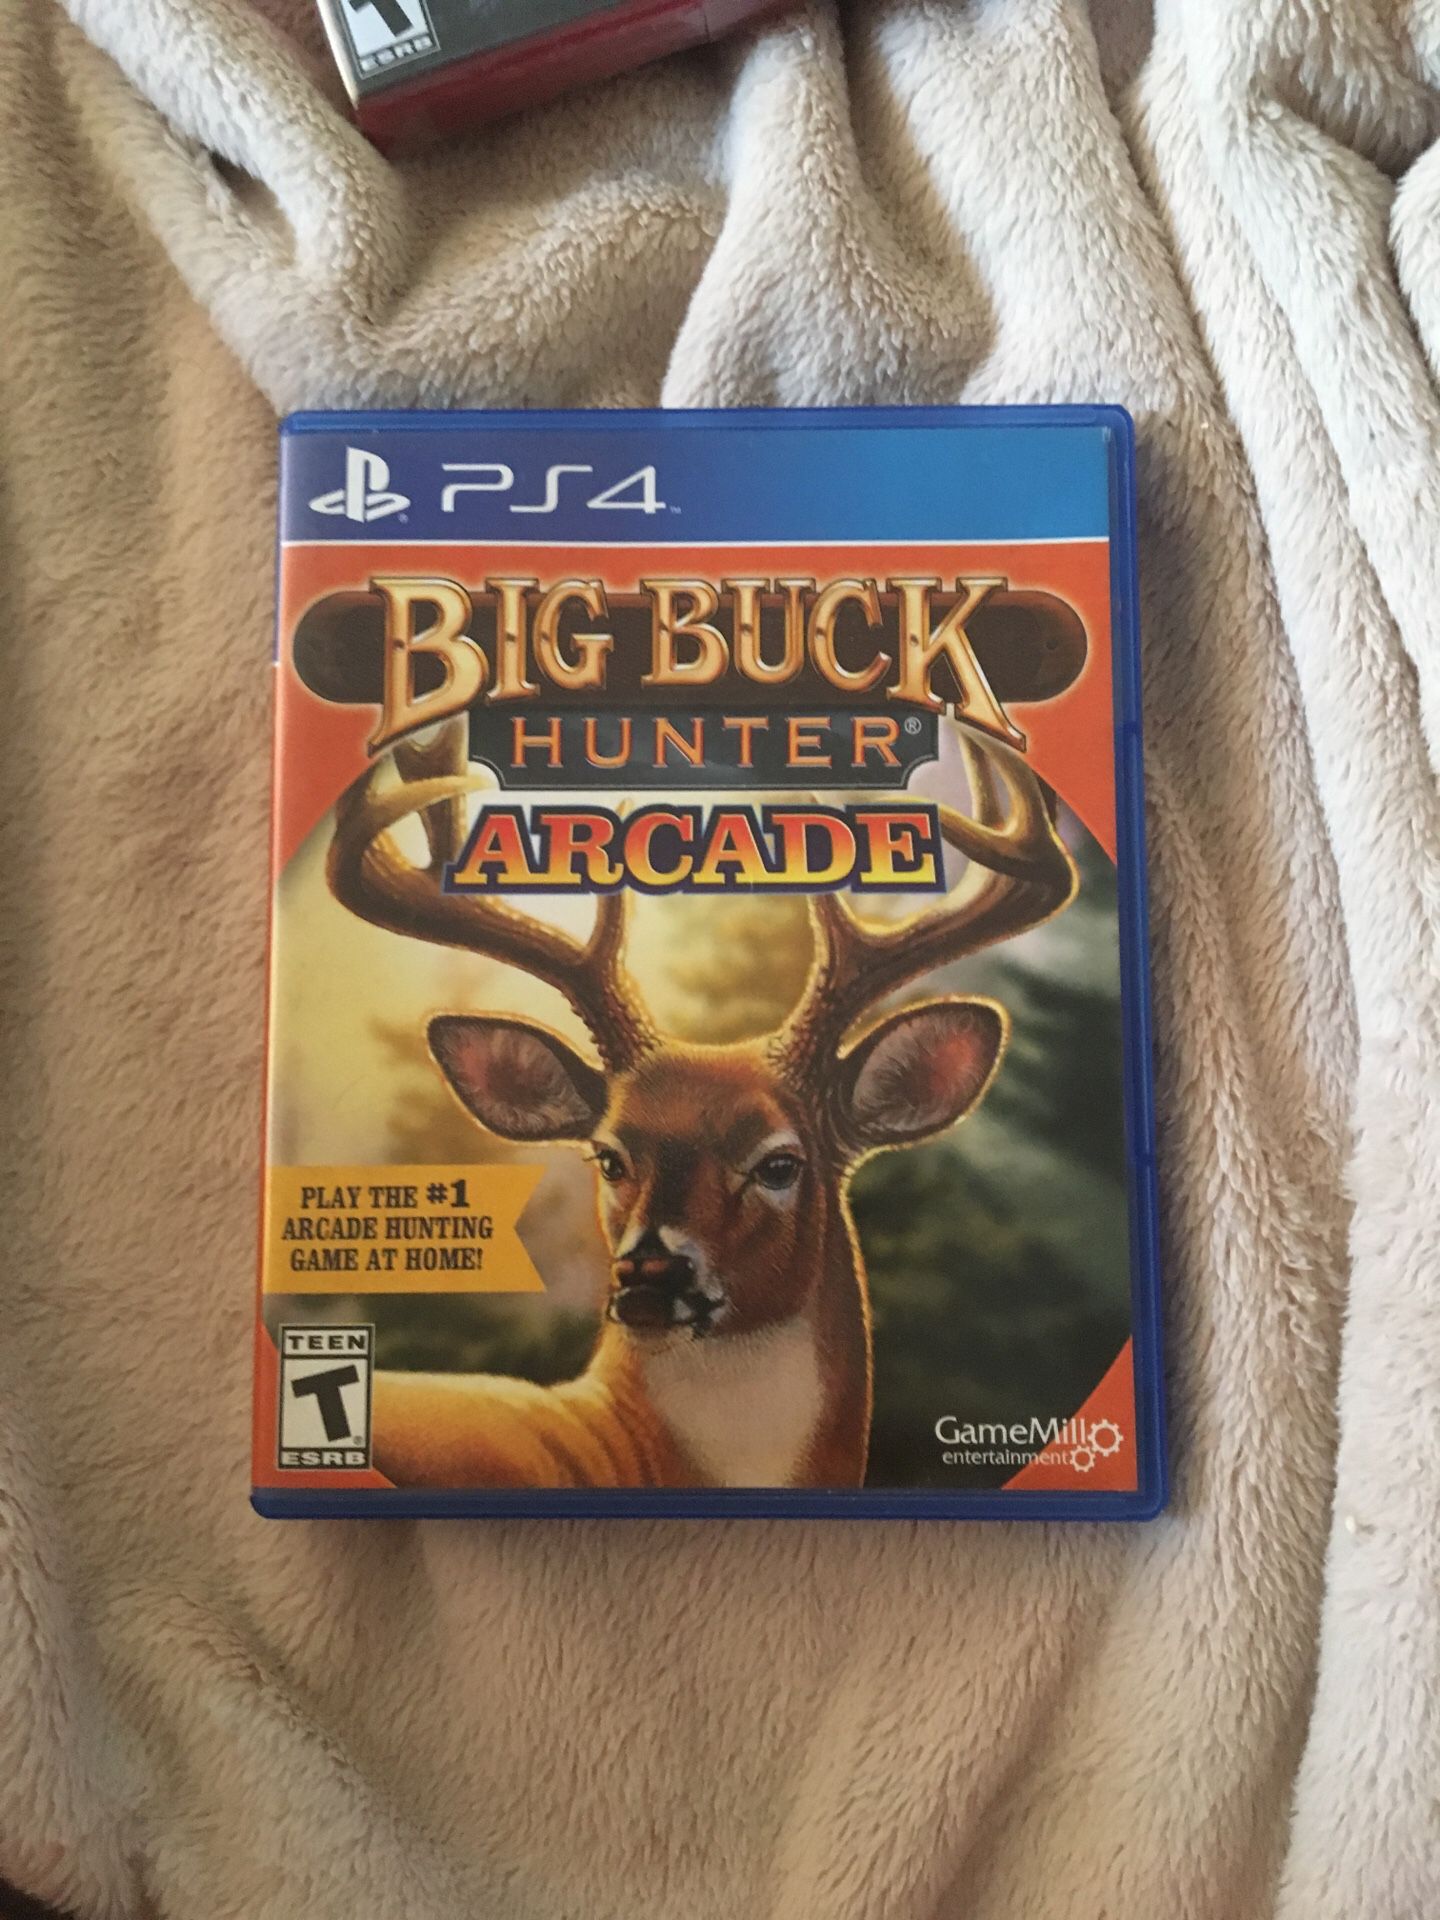 Big buck hunter arcade